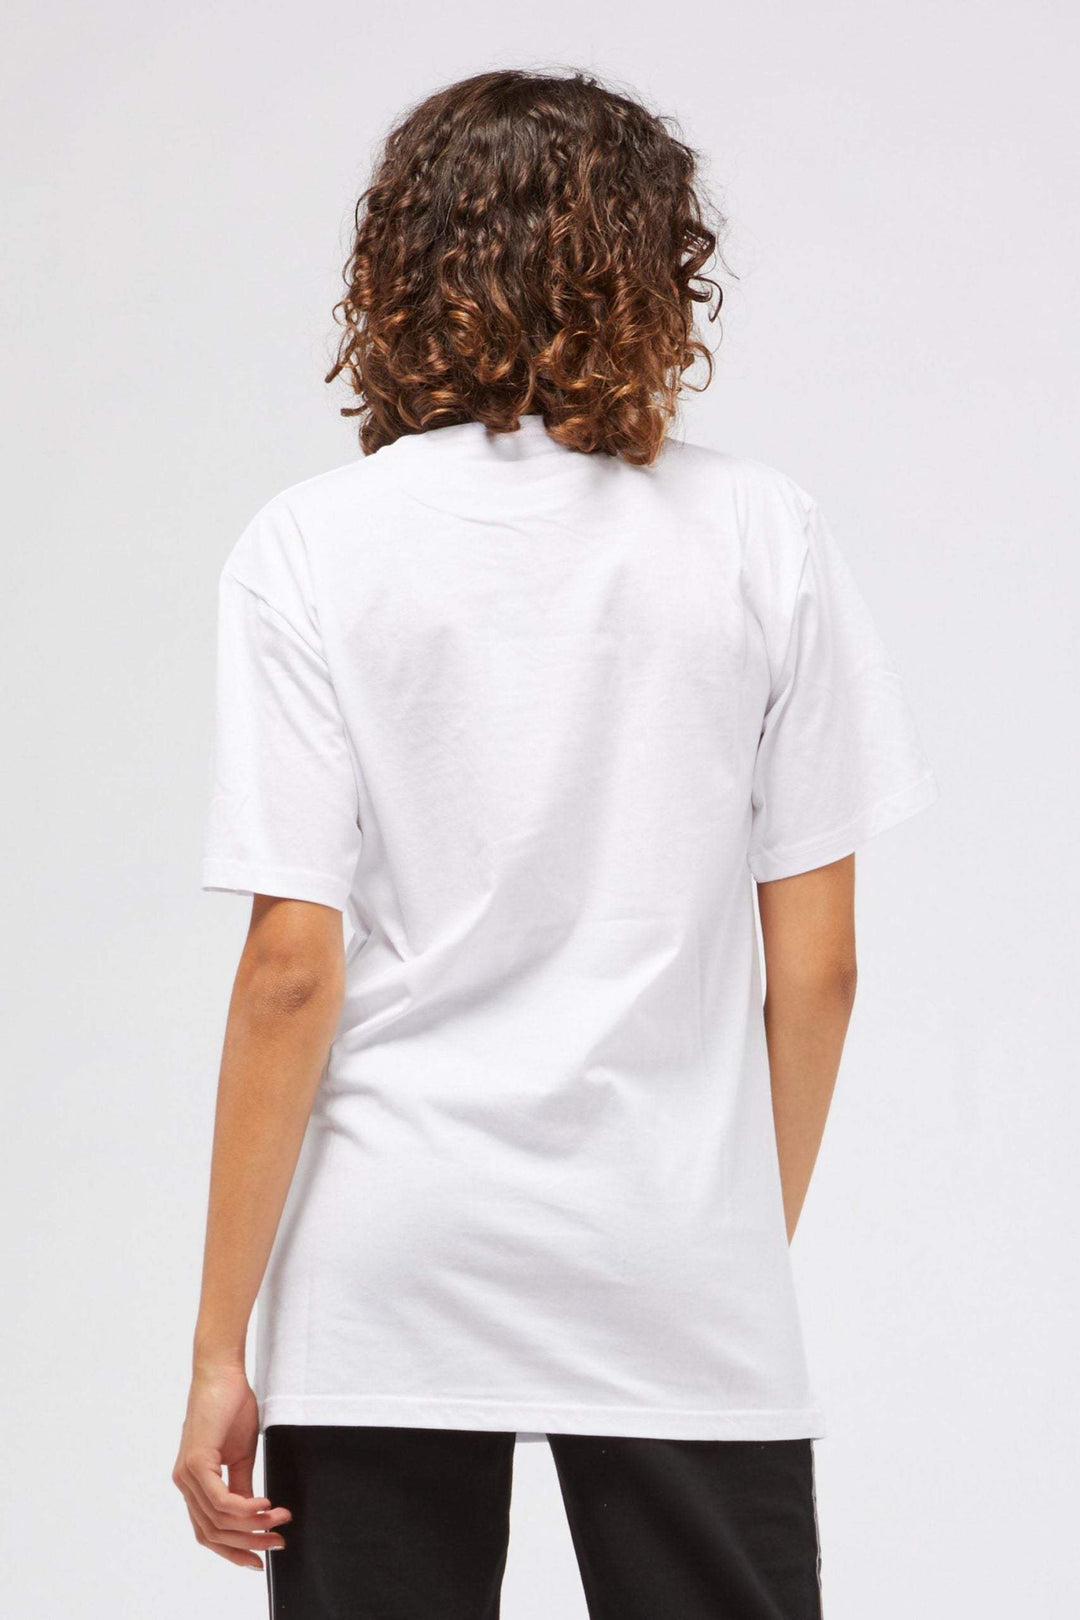 Custo Barcelona White Cotton Tops & T-Shirt Custo Barcelona, feed-1, L, M, S, Tops & T-Shirts - Women - Clothing, White, XS at SEYMAYKA